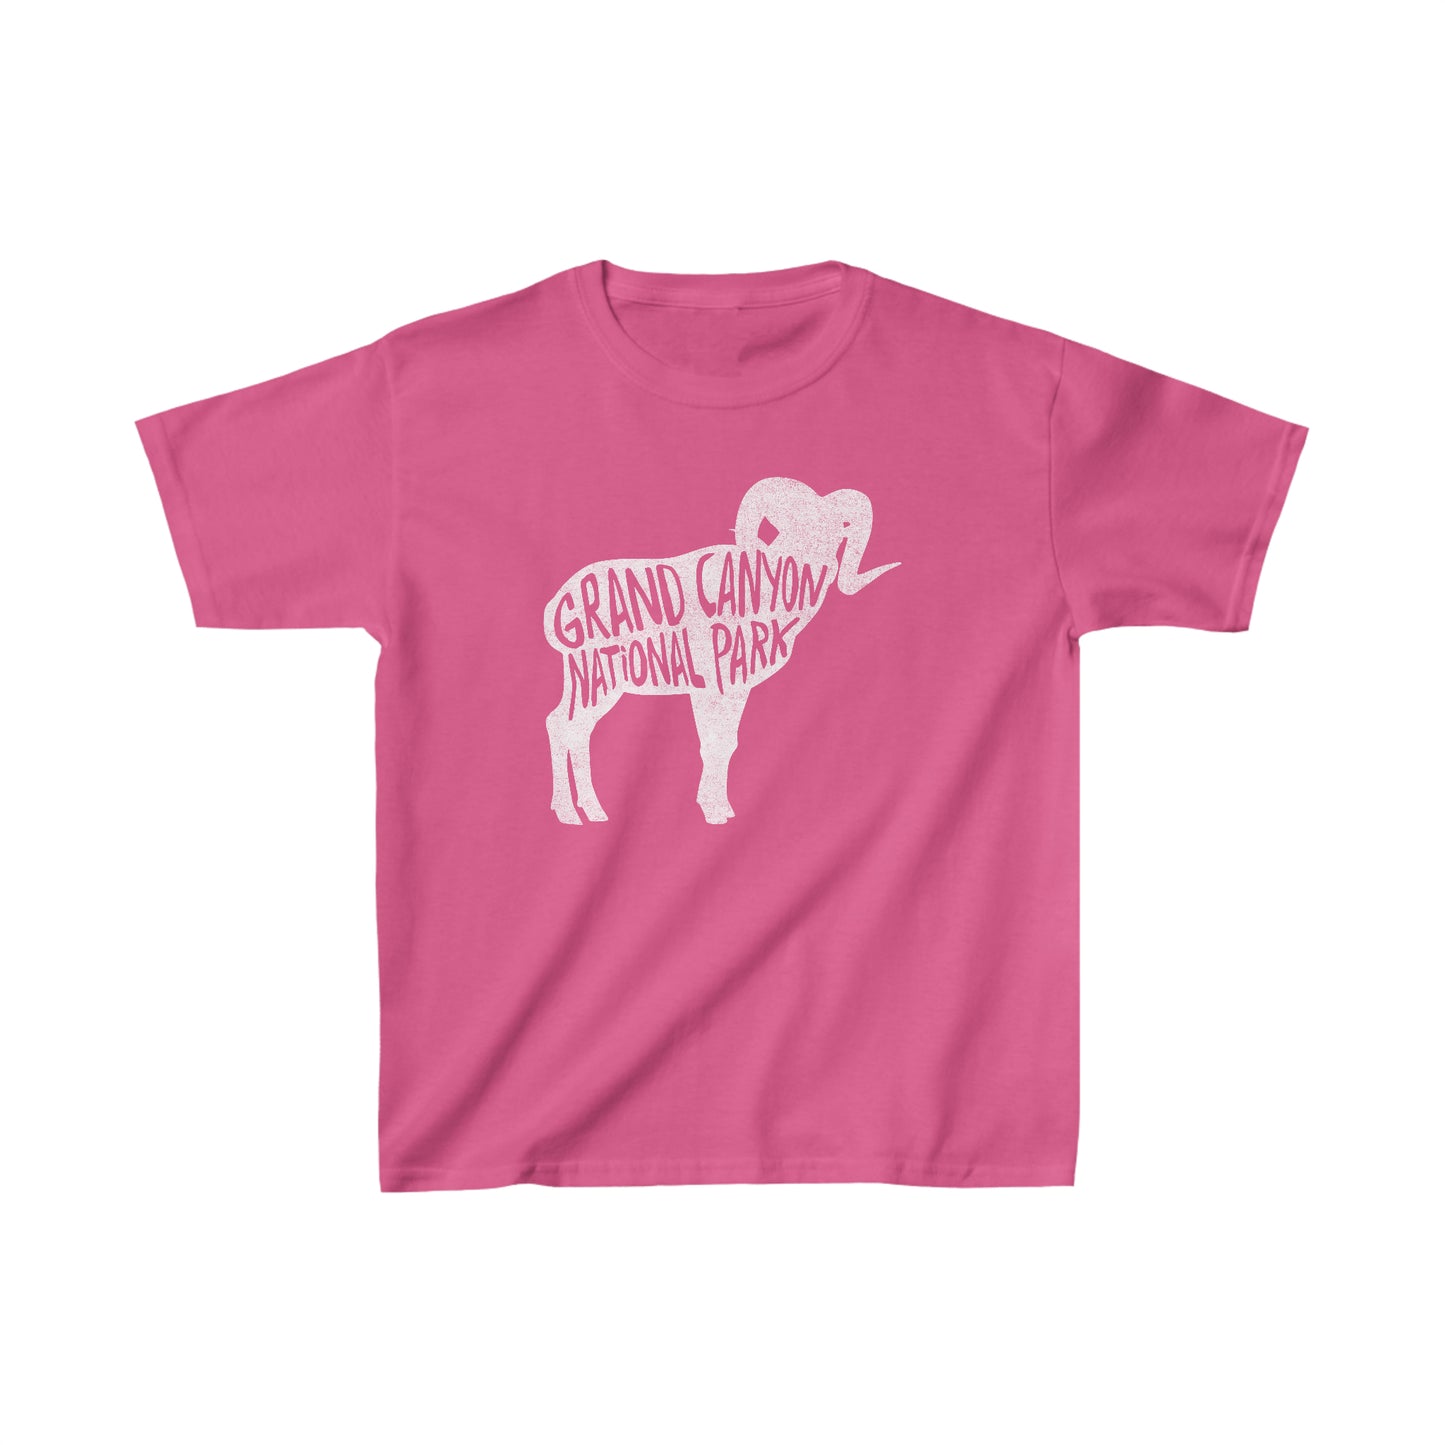 Grand Canyon National Park Child T-Shirt - Bighorn Sheep Chunky Text